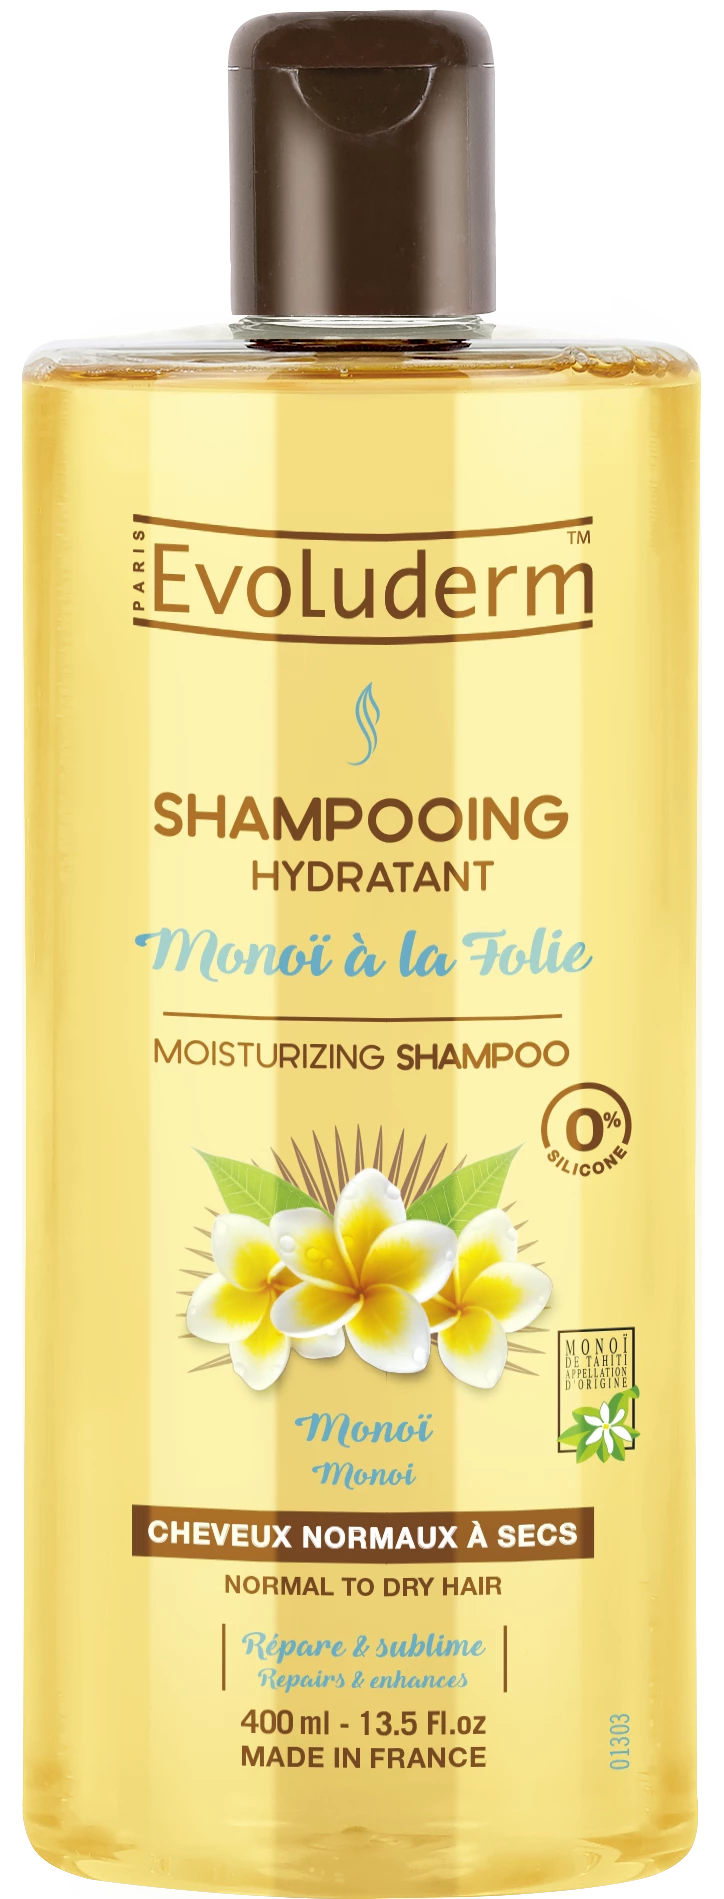 Shampoo Hidratante Monoi à la Folie, 400ml - EVOLUDERM